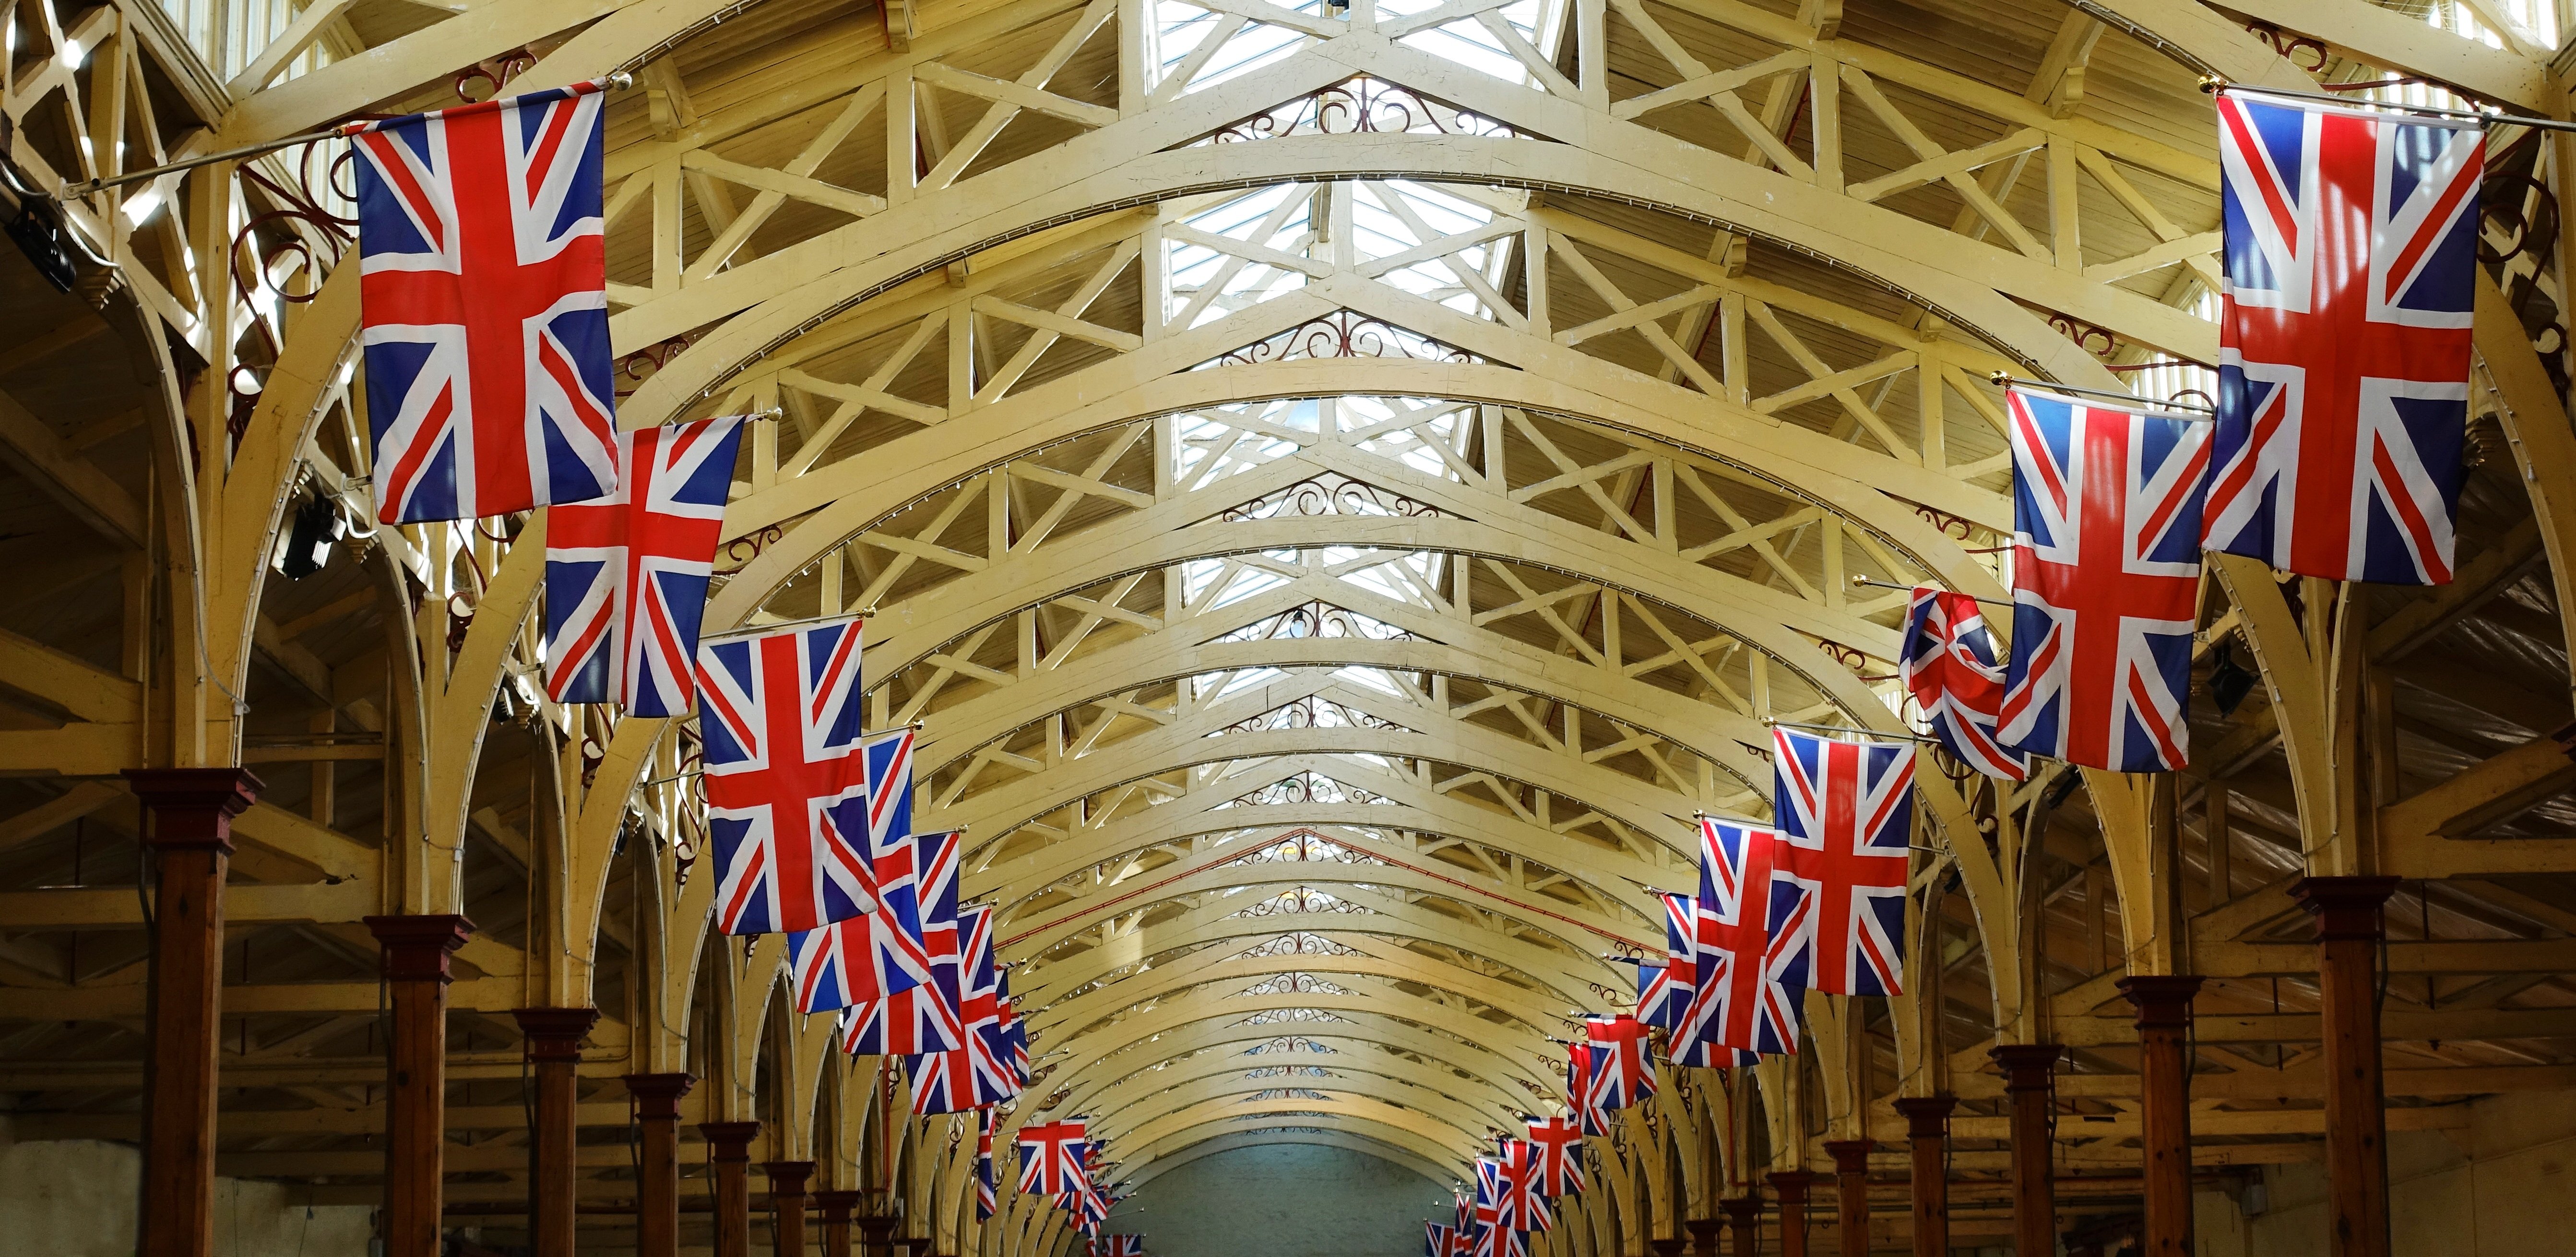 light-perspective-roof-building-celebration-arch-ceiling-hall-market-bunting-aisle-symmetry-flags-brexit-british-union-jack-britain-tourist-attraction-jubilee-devon-union-flag-barnstaple-hammer-beam-pannier-market-1389633.jpg